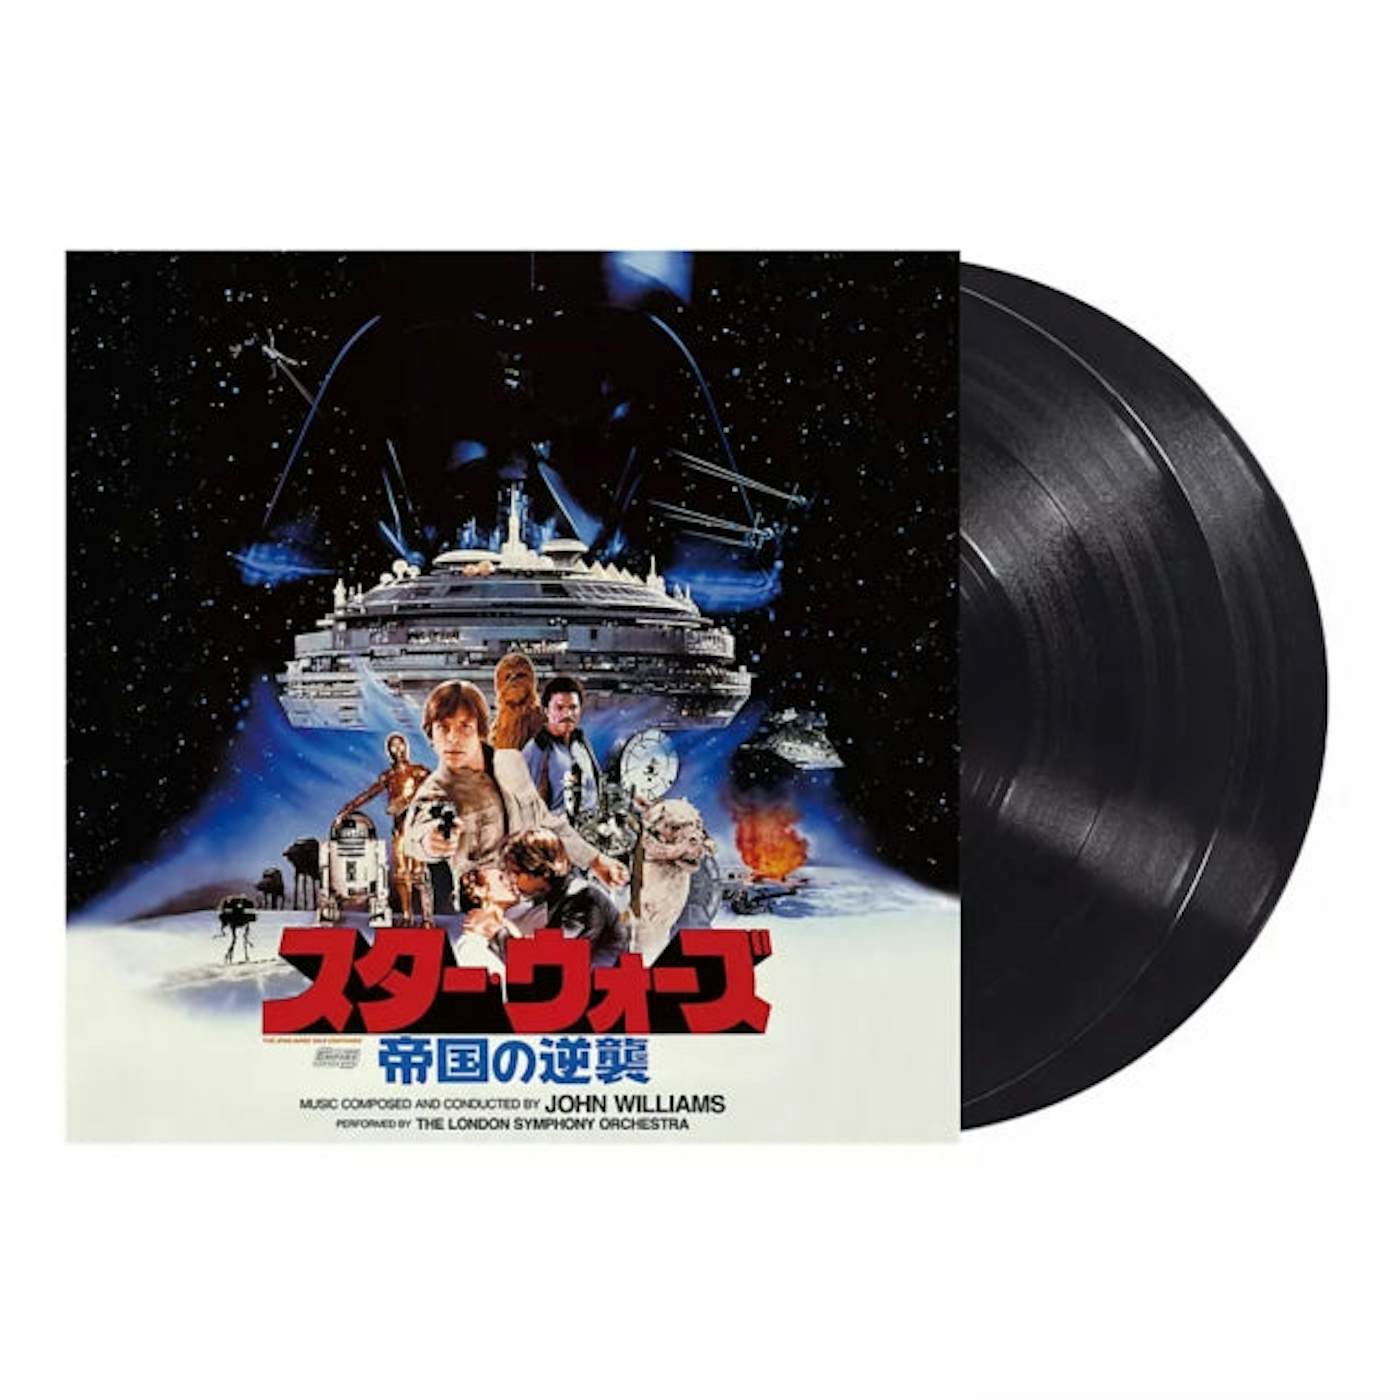 John Williams LP Vinyl Record - Star Wars: The Empire Strikes Back - Original Soundtrack